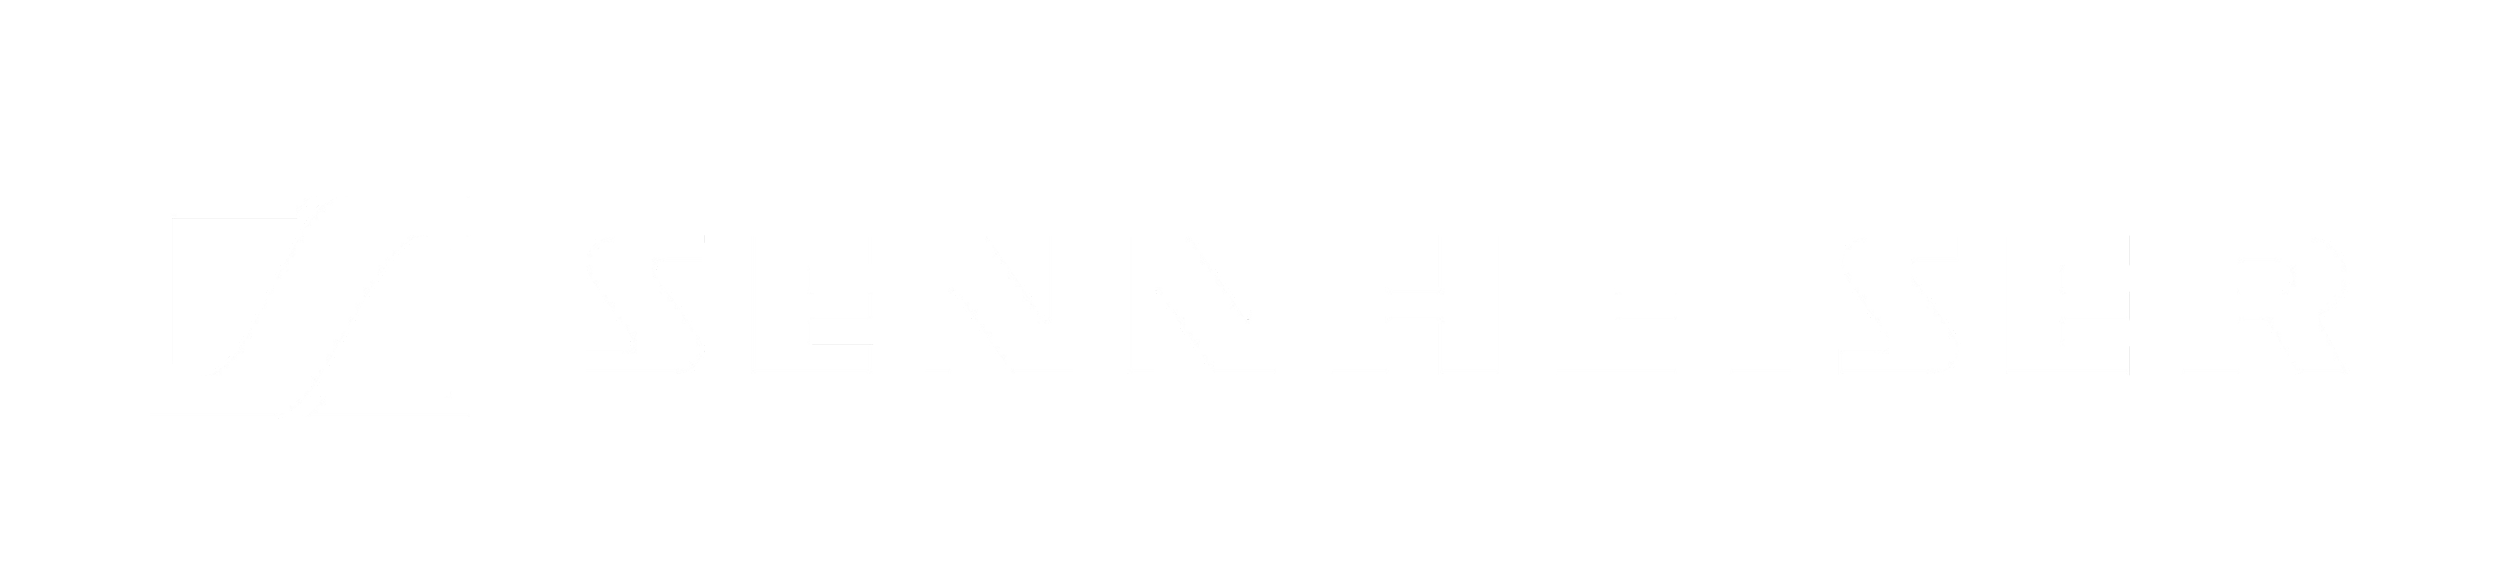 SENNHEISER-logo.png